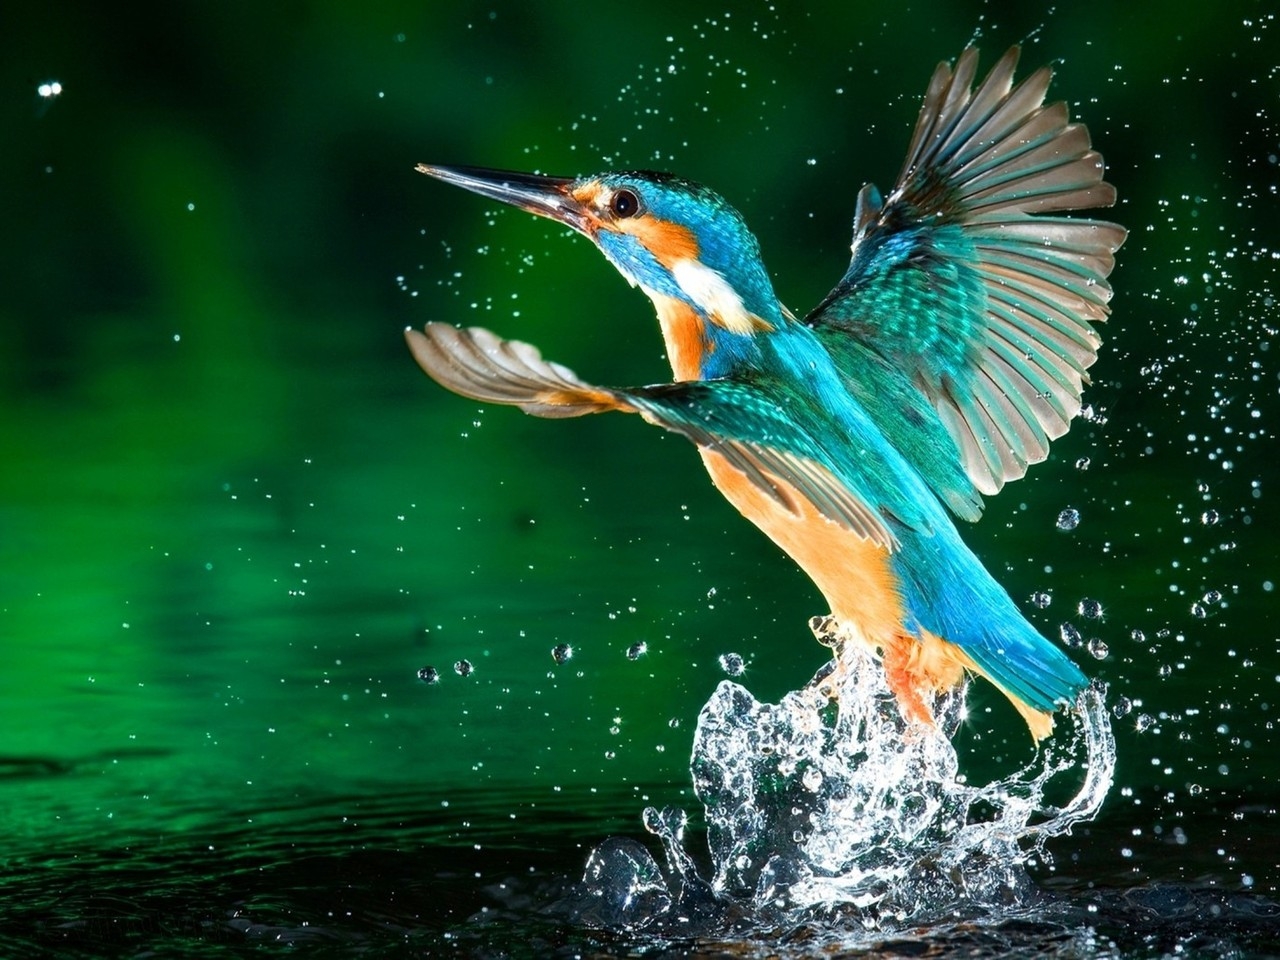 Kingfisher Bird for 1280 x 960 resolution